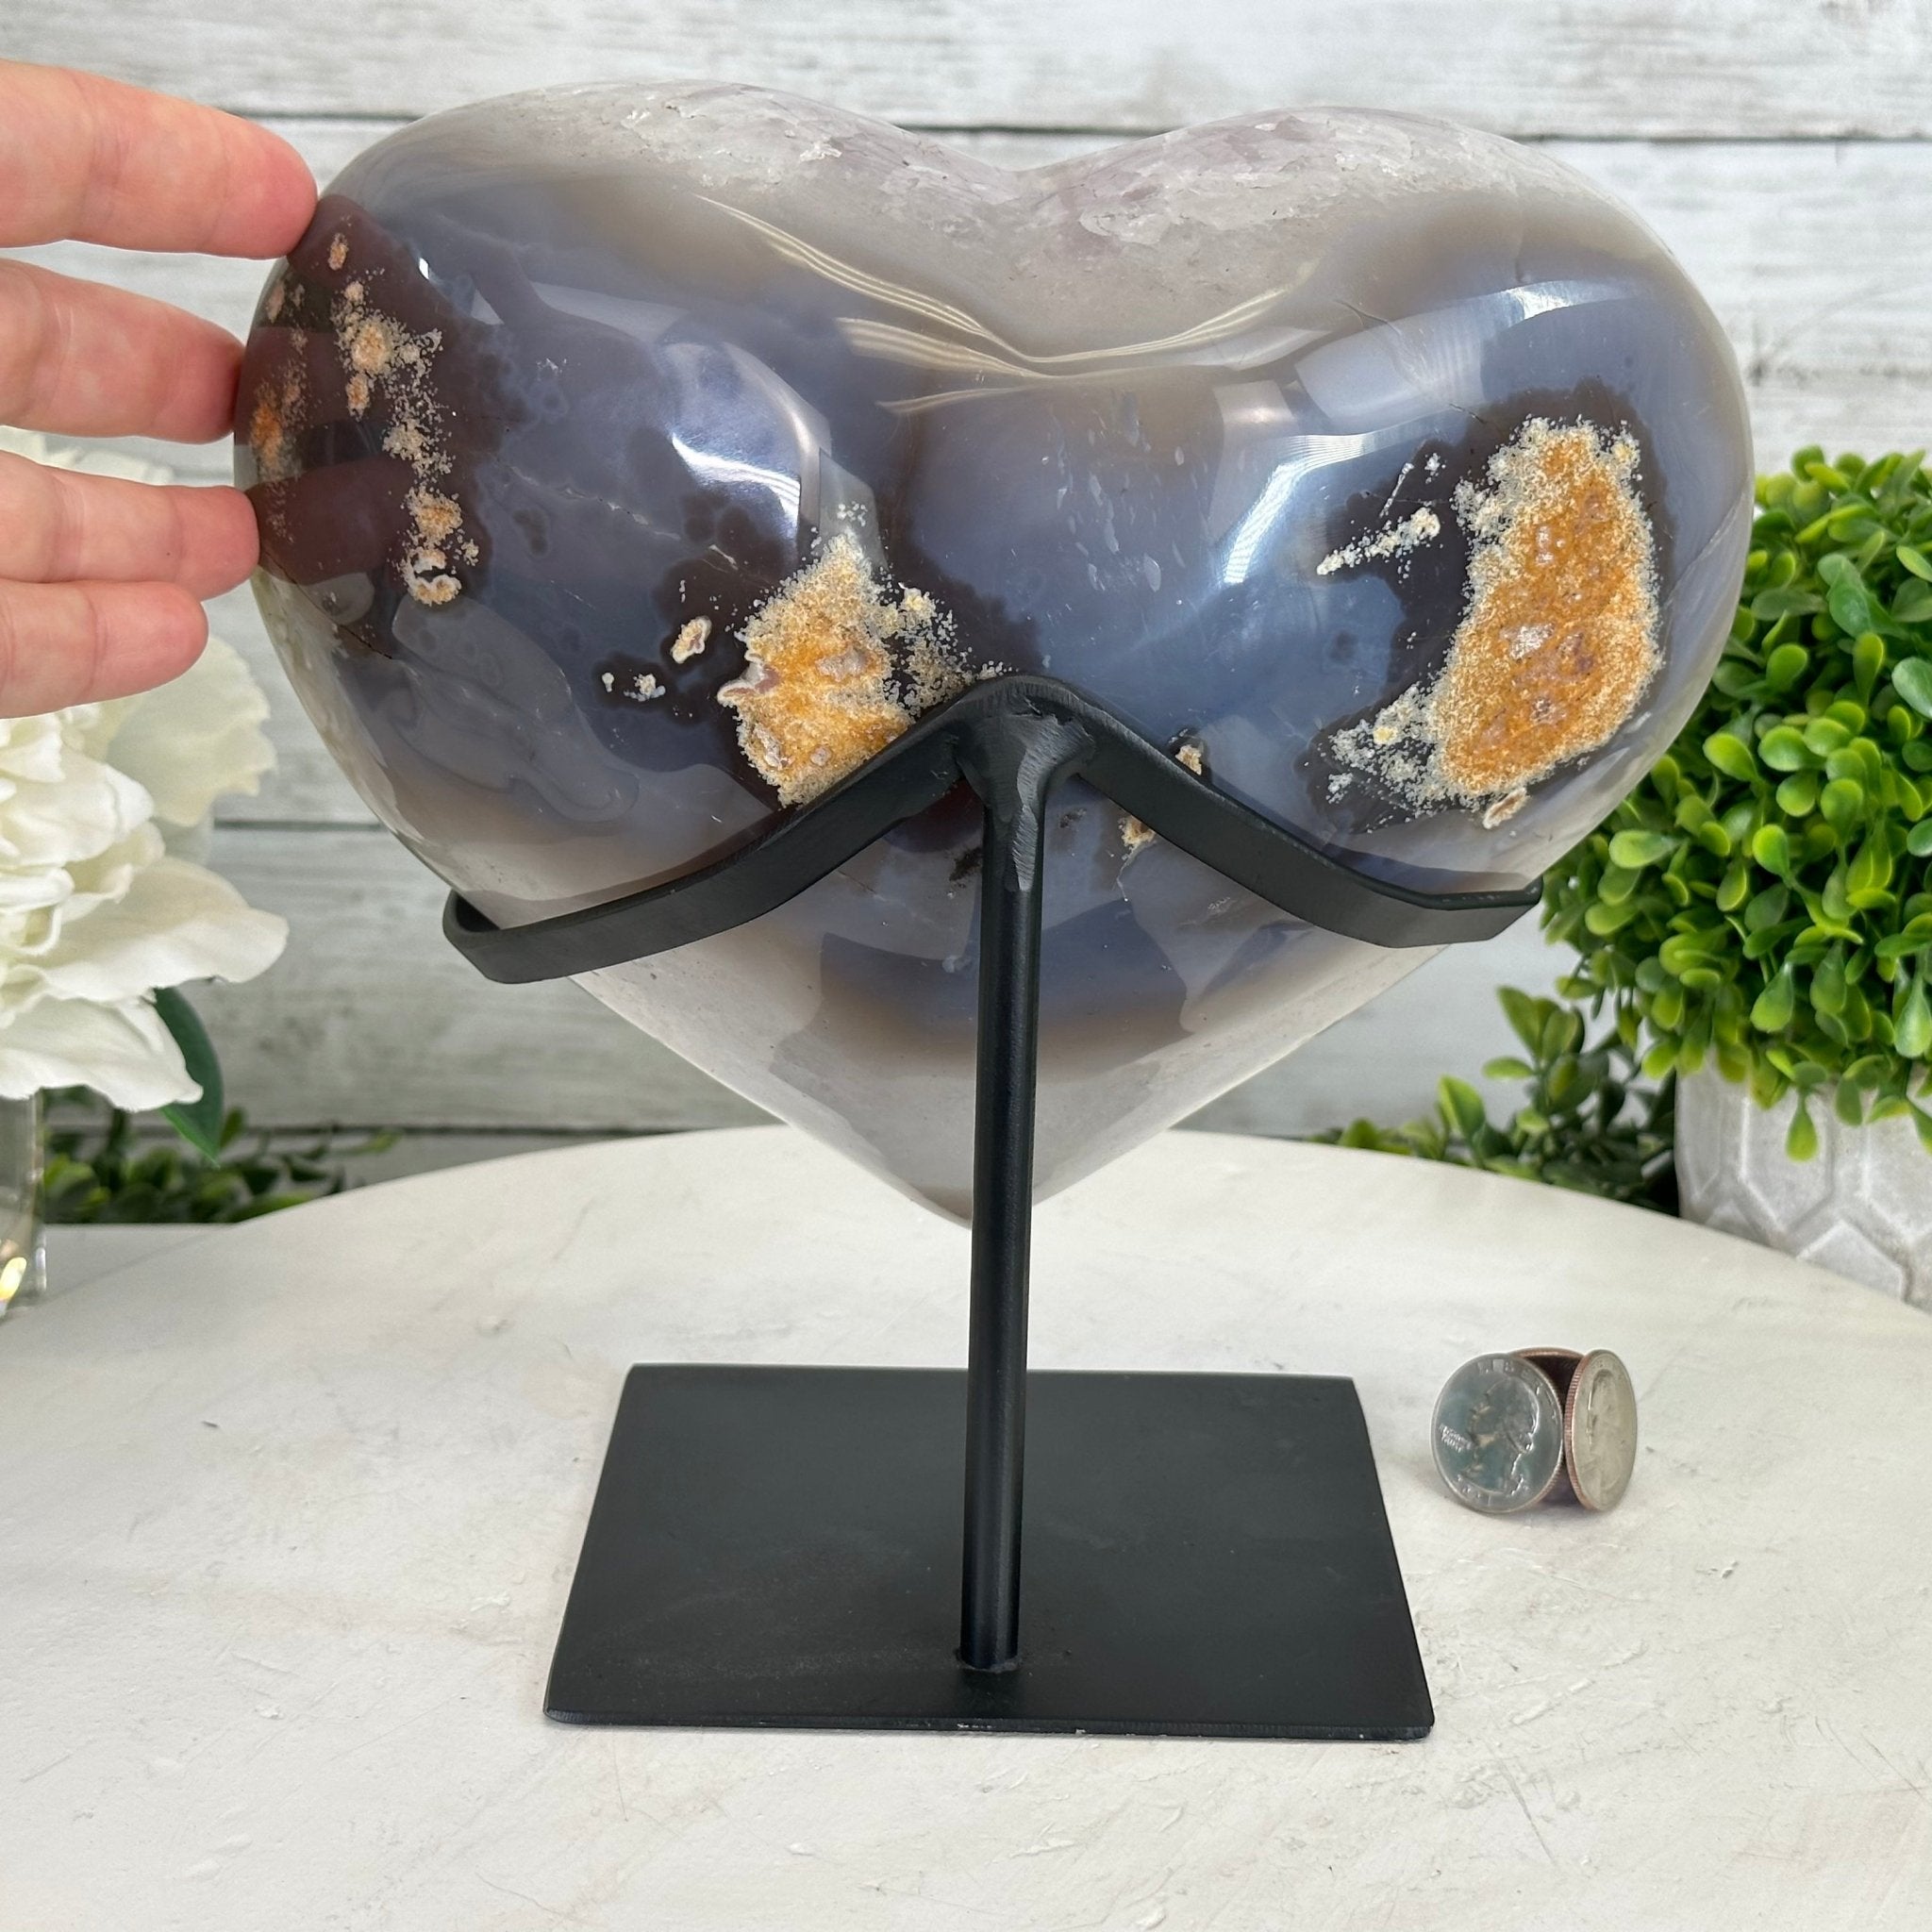 Polished Agate Heart Geode on a Metal Stand, 9.7 lbs & 8.4" Tall, Model #5468-0087 by Brazil Gems - Brazil GemsBrazil GemsPolished Agate Heart Geode on a Metal Stand, 9.7 lbs & 8.4" Tall, Model #5468-0087 by Brazil GemsHearts5468-0087